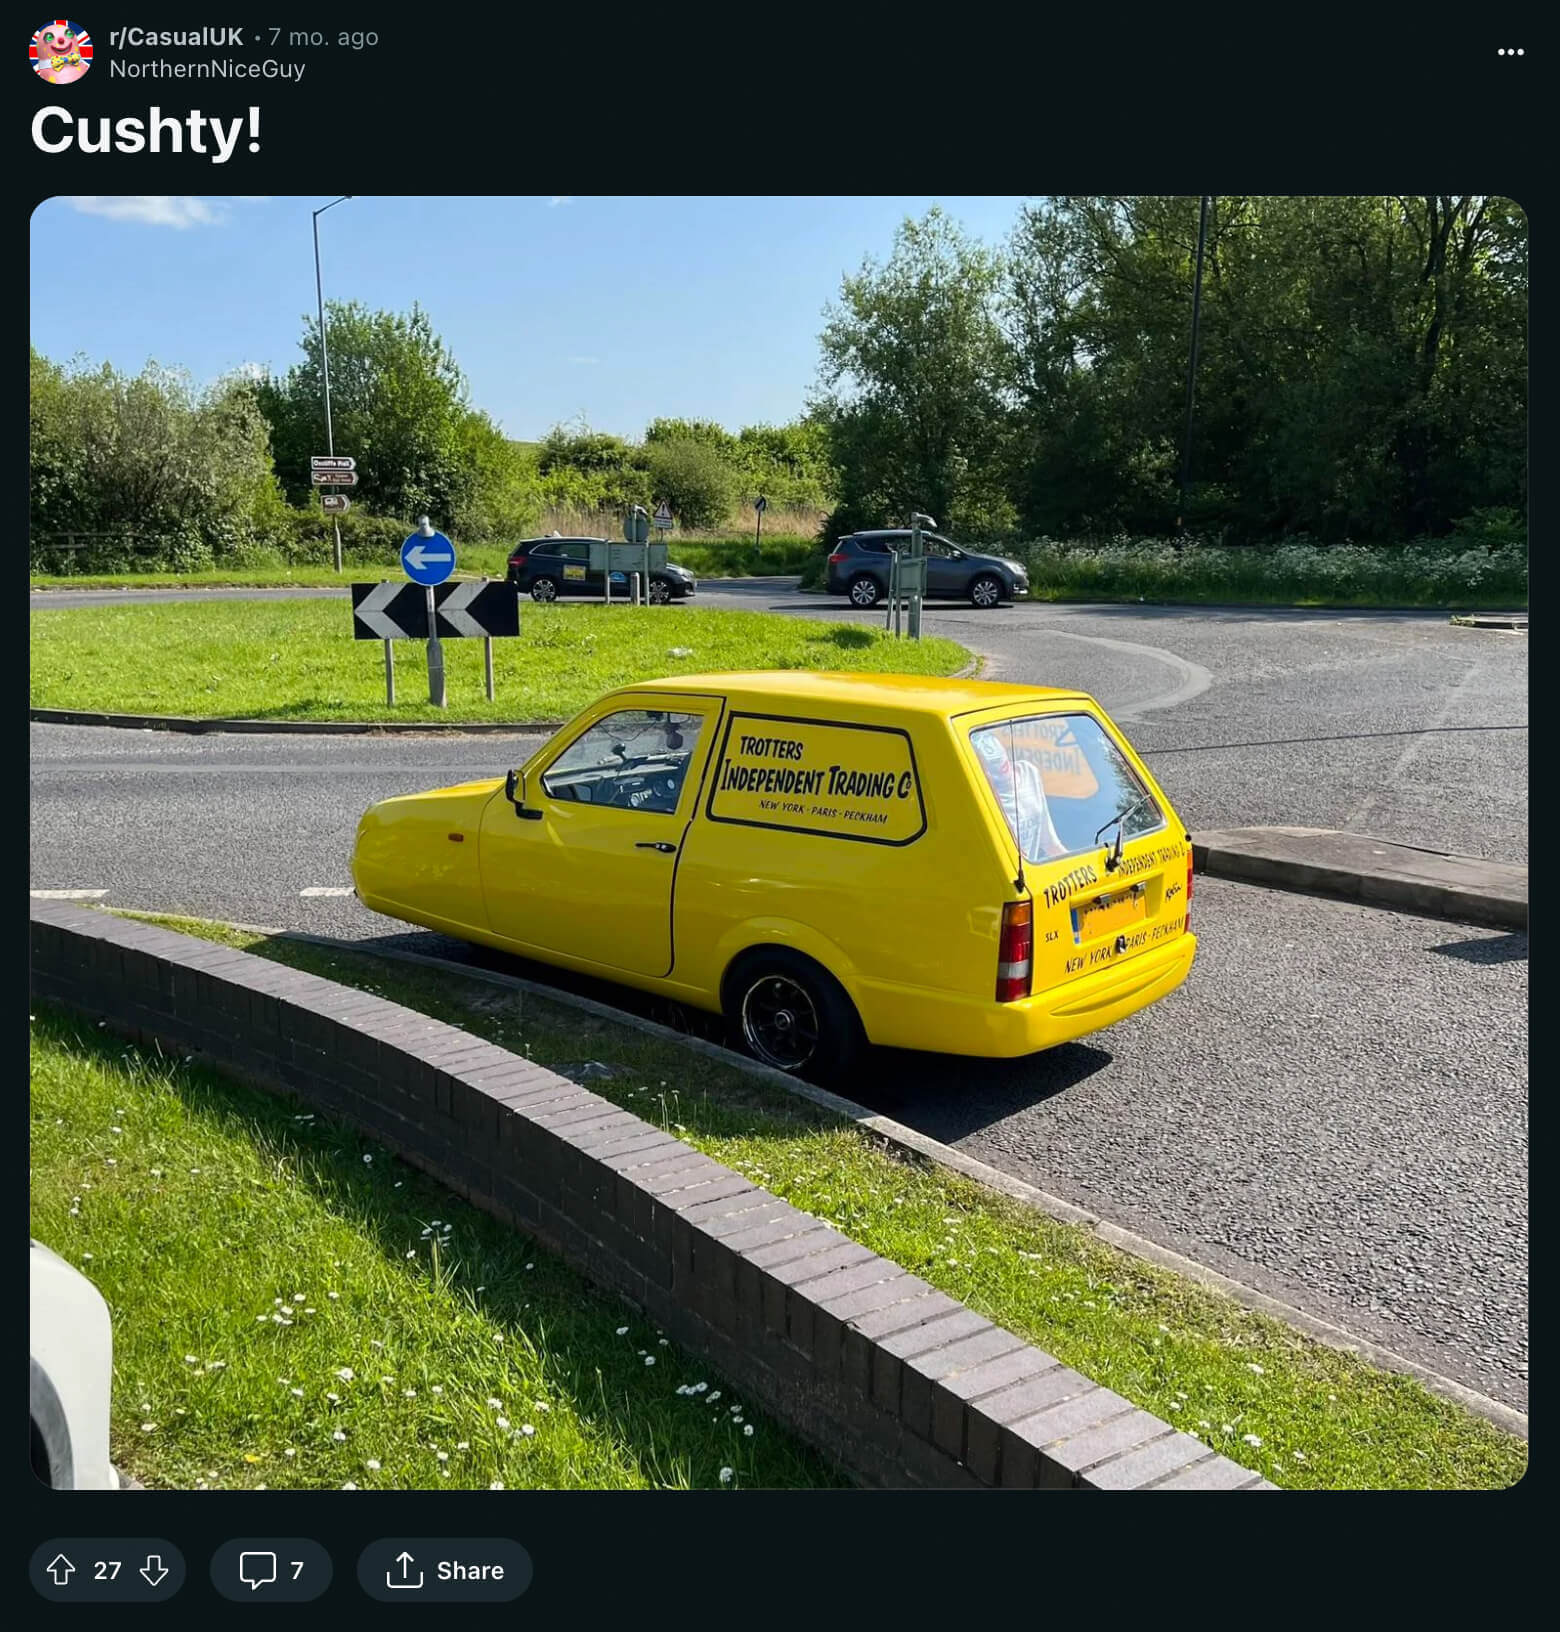 Redditor appreciation of the unique yellow vehicle